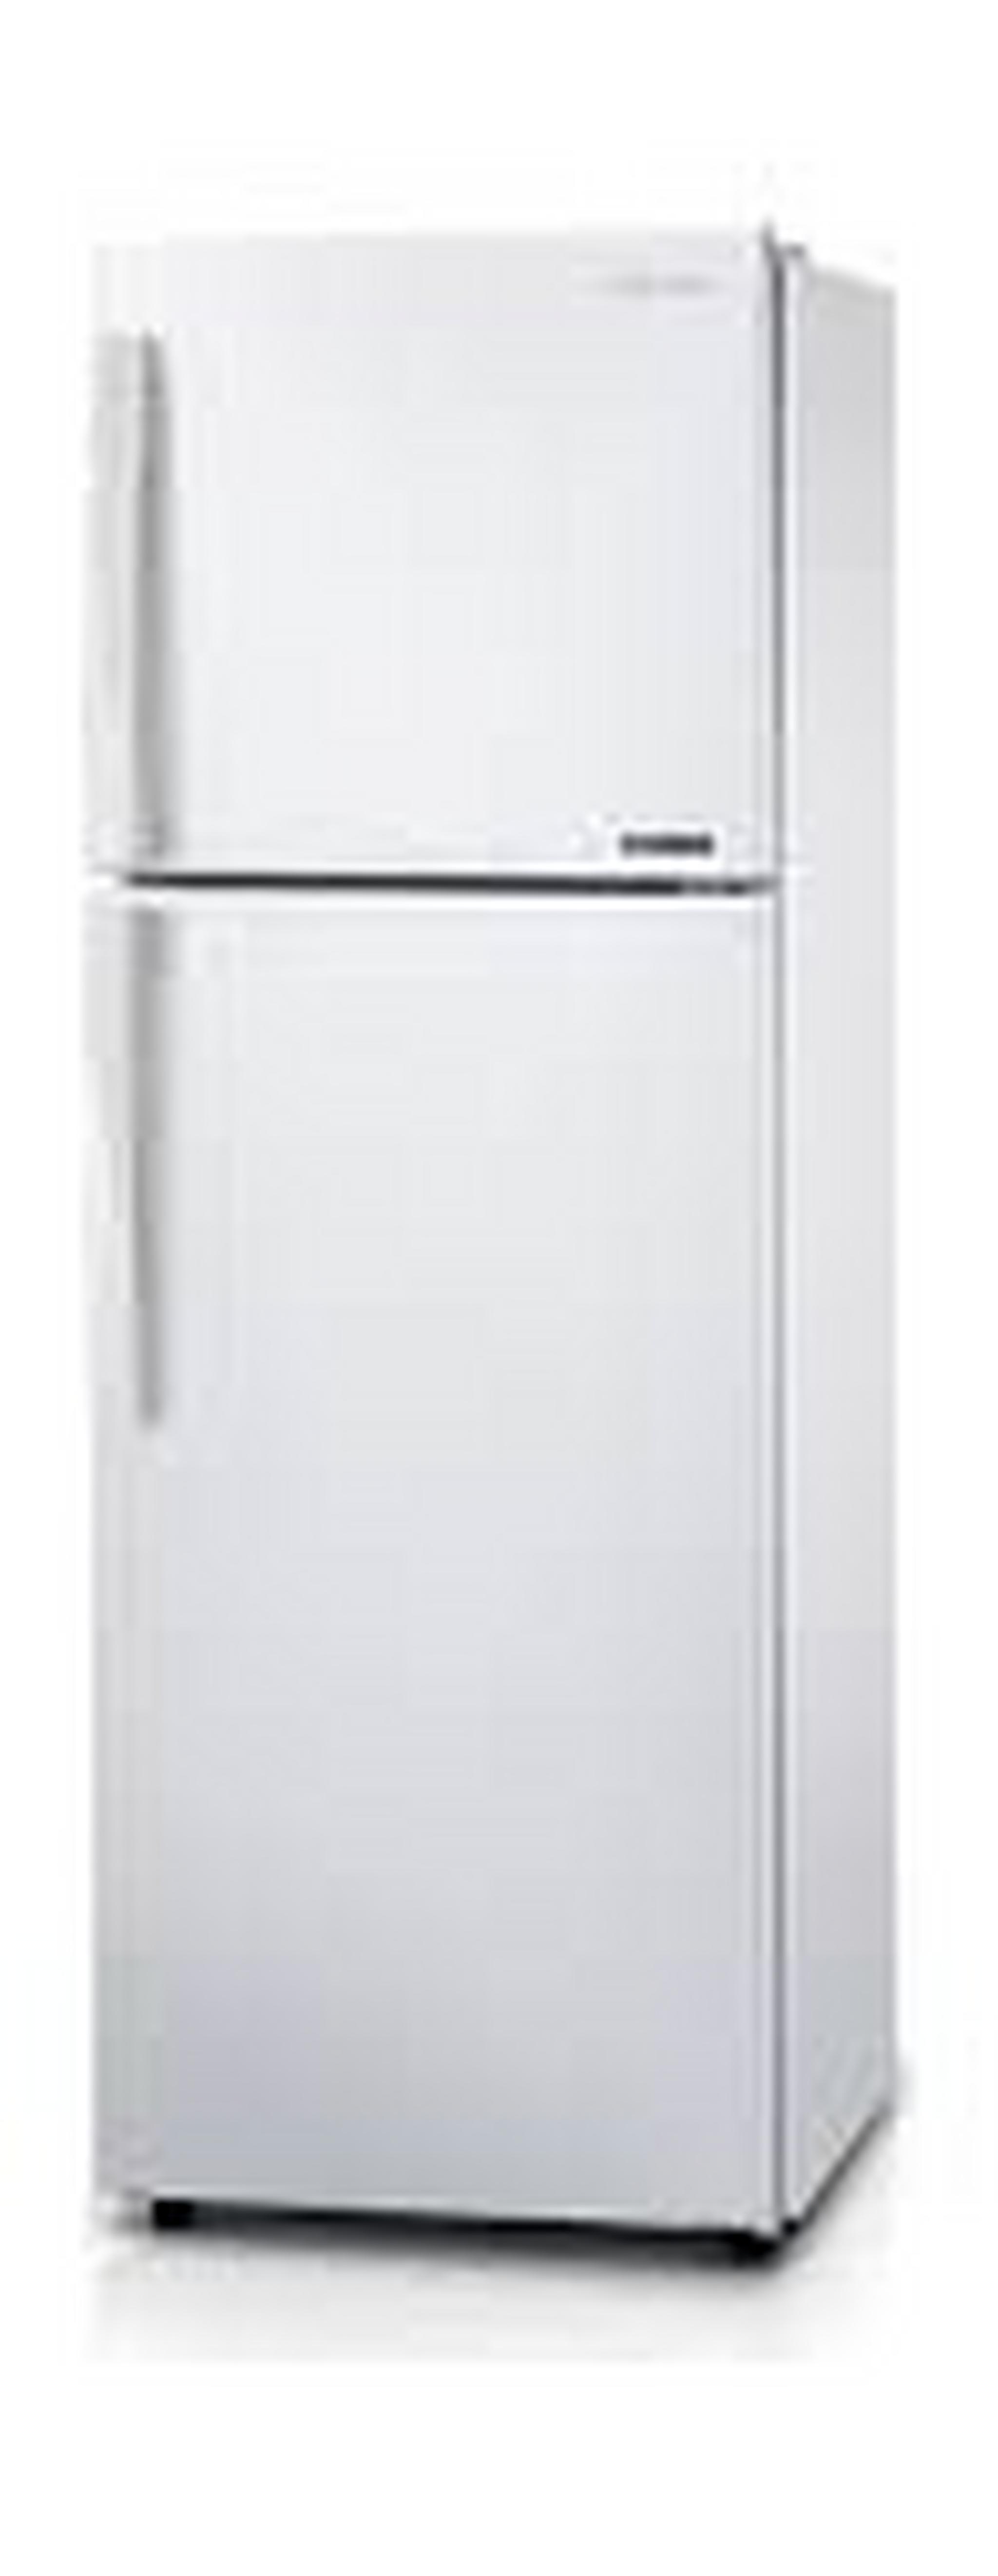 Samsung 9 Cubic Feet Two Door Refrigerator - White RT25HAR7DWWA